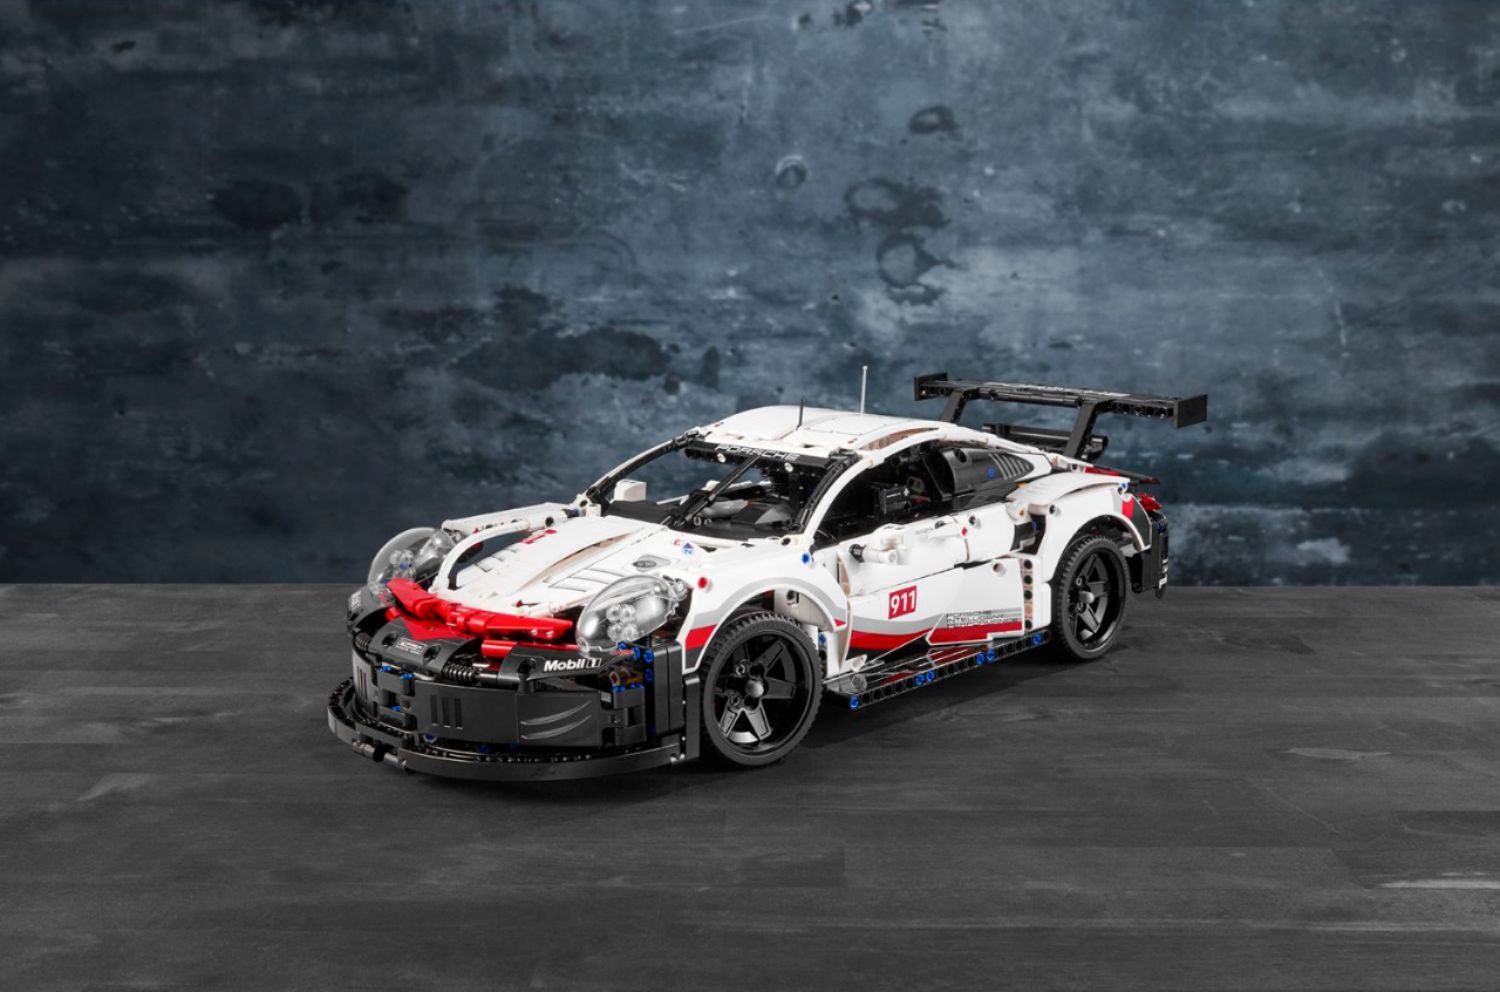 Best Buy: LEGO Technic Porsche 911 RSR 42096 6251551